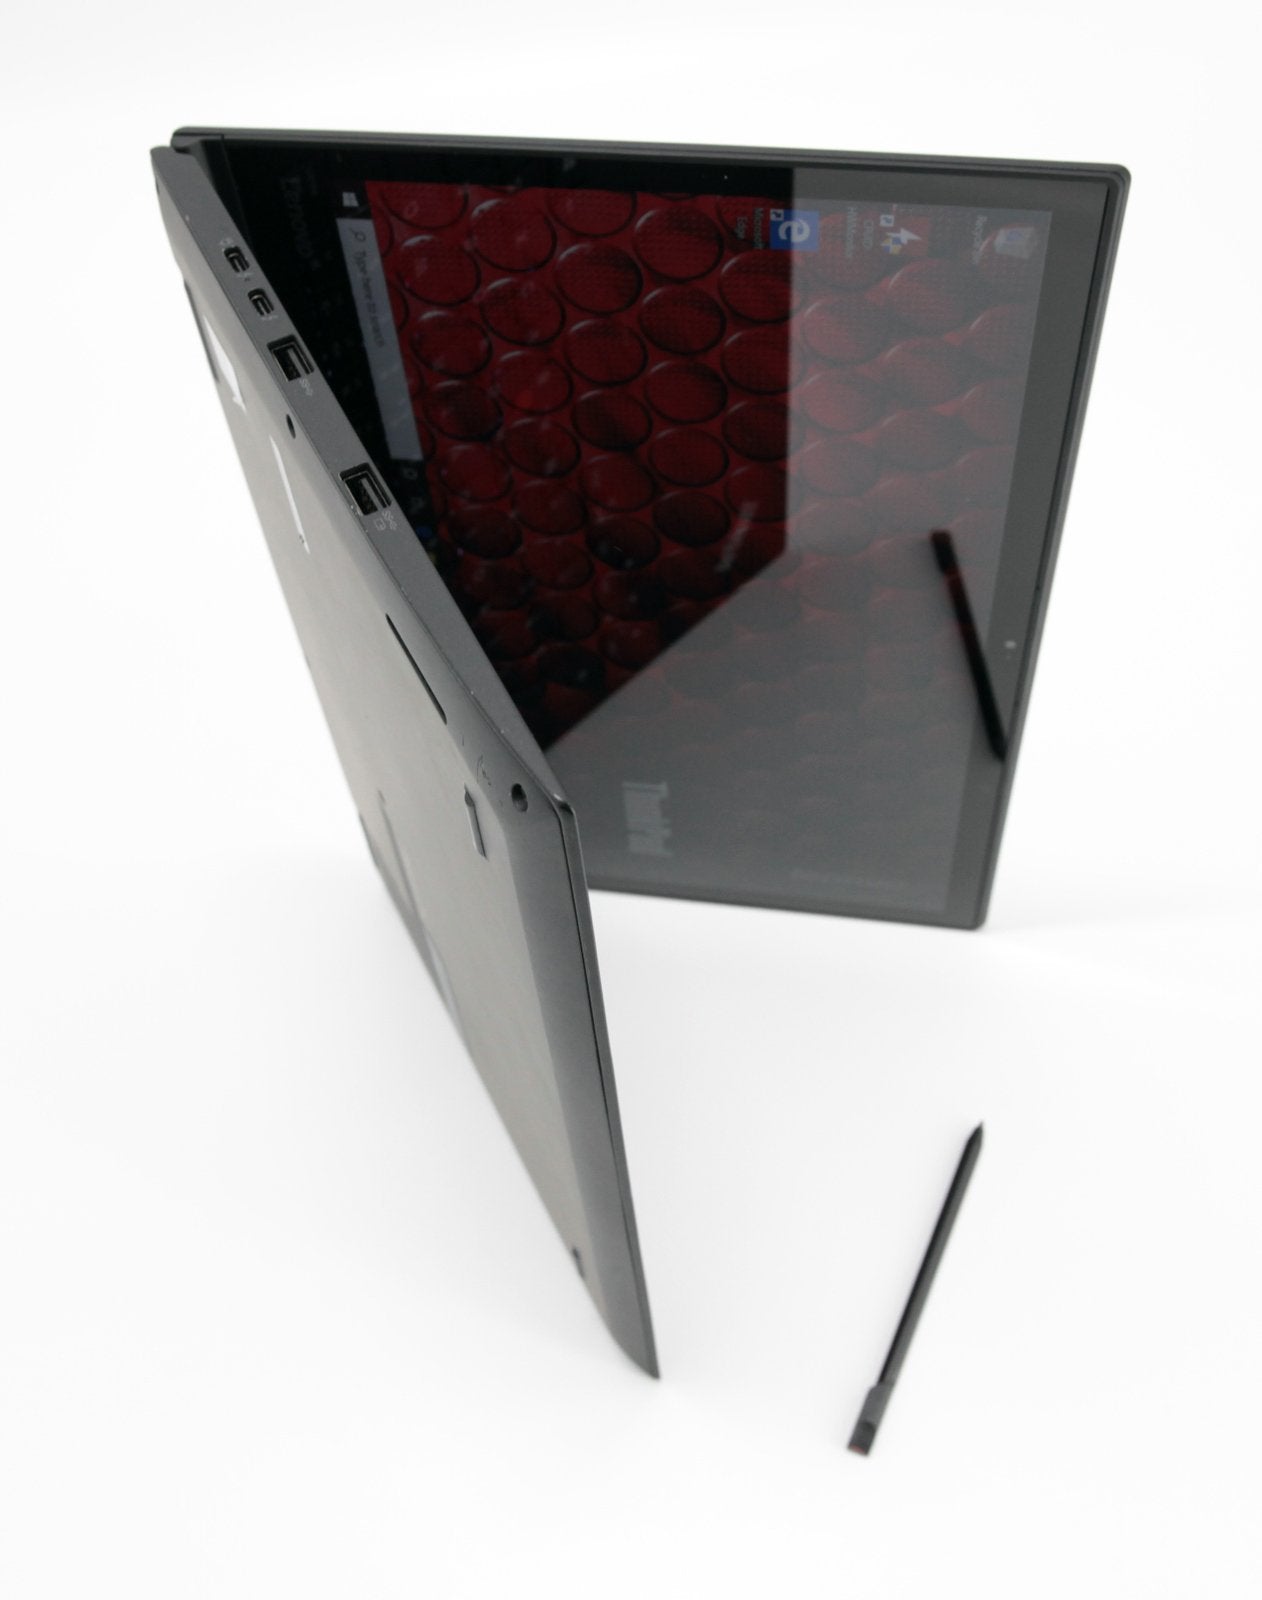 Lenovo Thinkpad X1 Yoga 2nd Gen Laptop: Core i7-7600U, 16GB RAM, 512GB, Warranty - CruiseTech